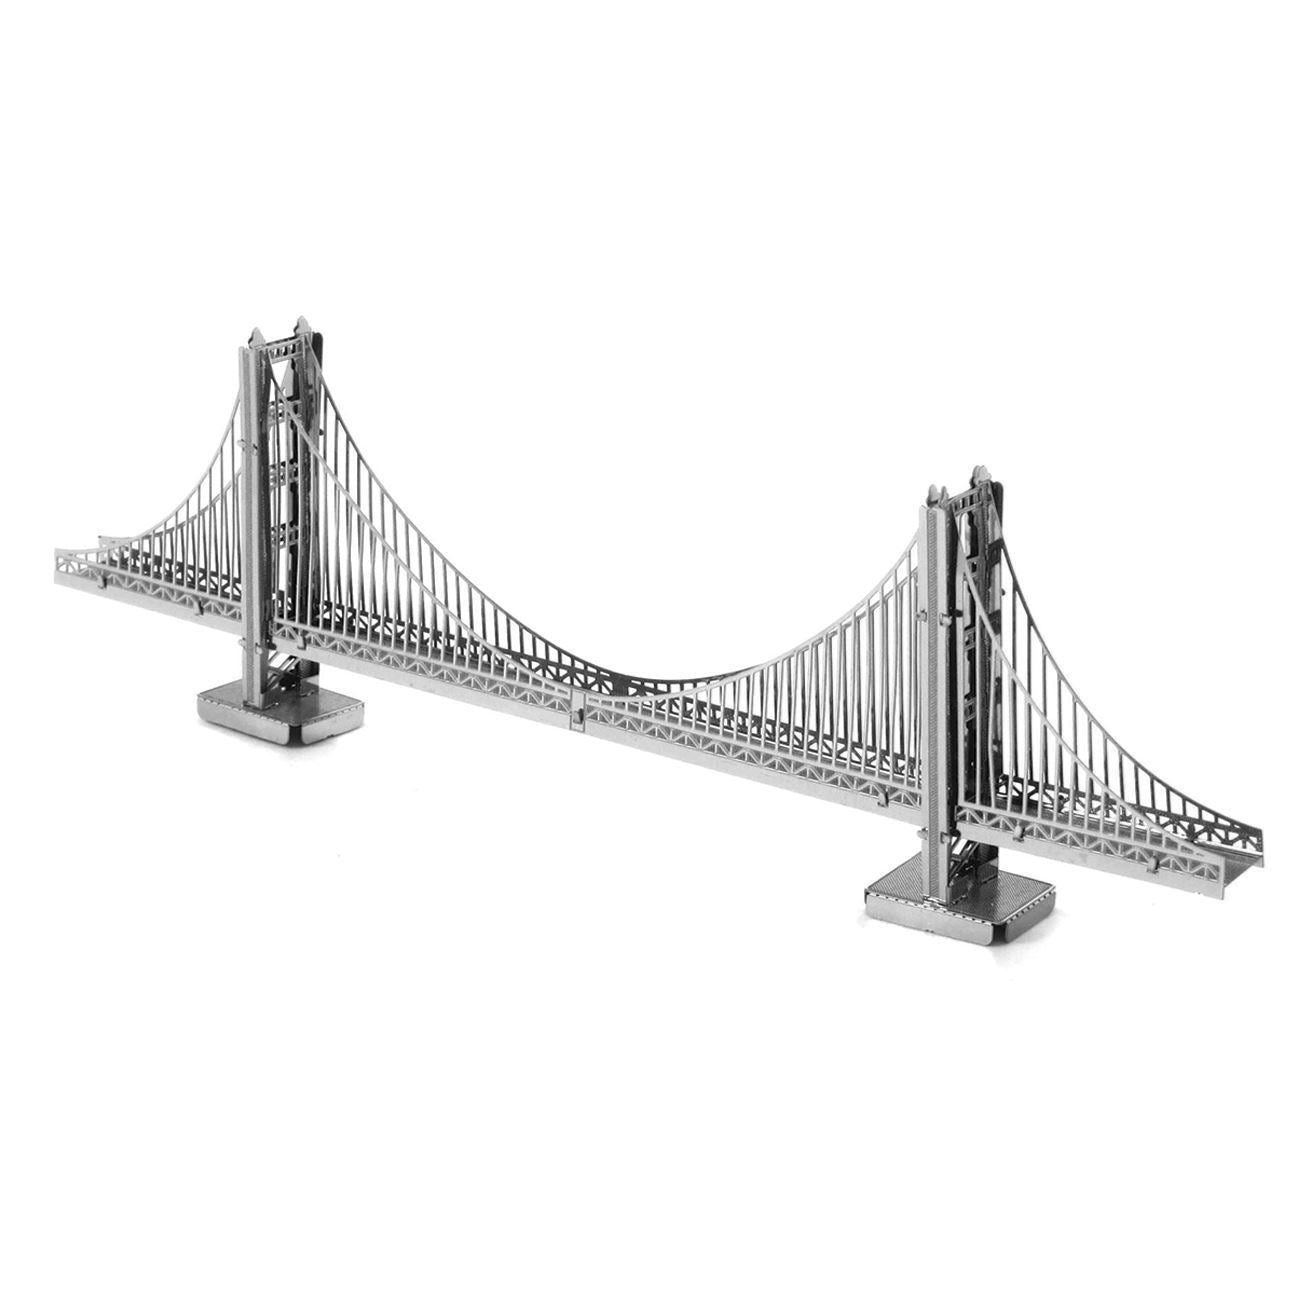 Golden Gate Bridge 3D Metal Model Kit